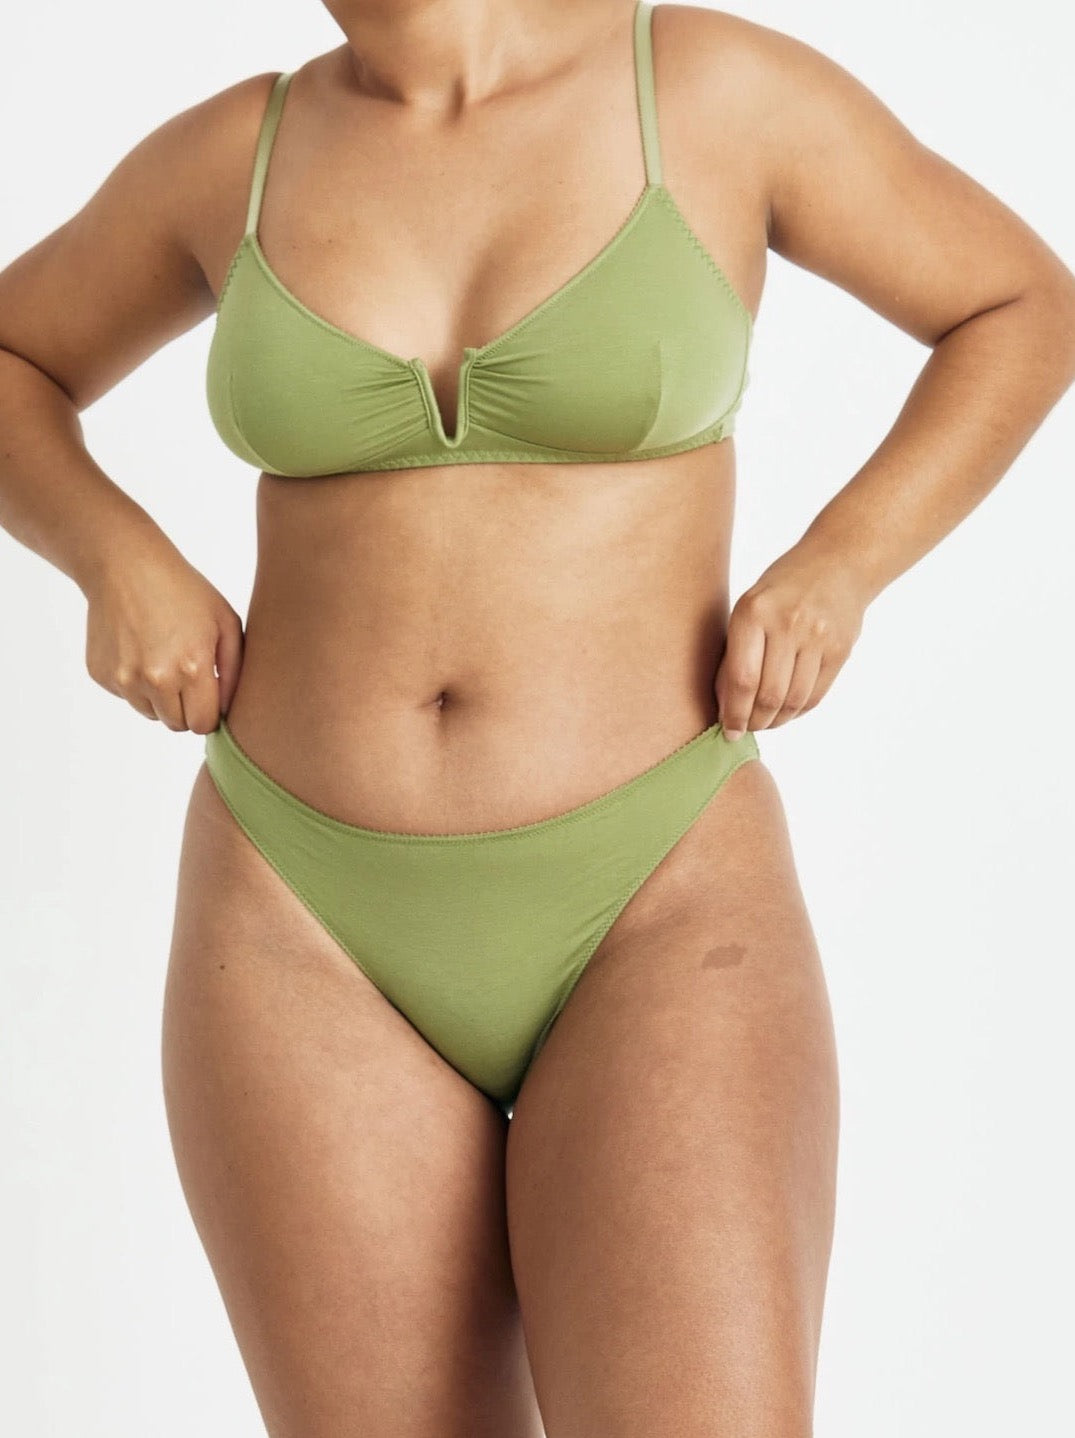 A woman in the Videris Angela Bra – Olive bikini top and bottom.